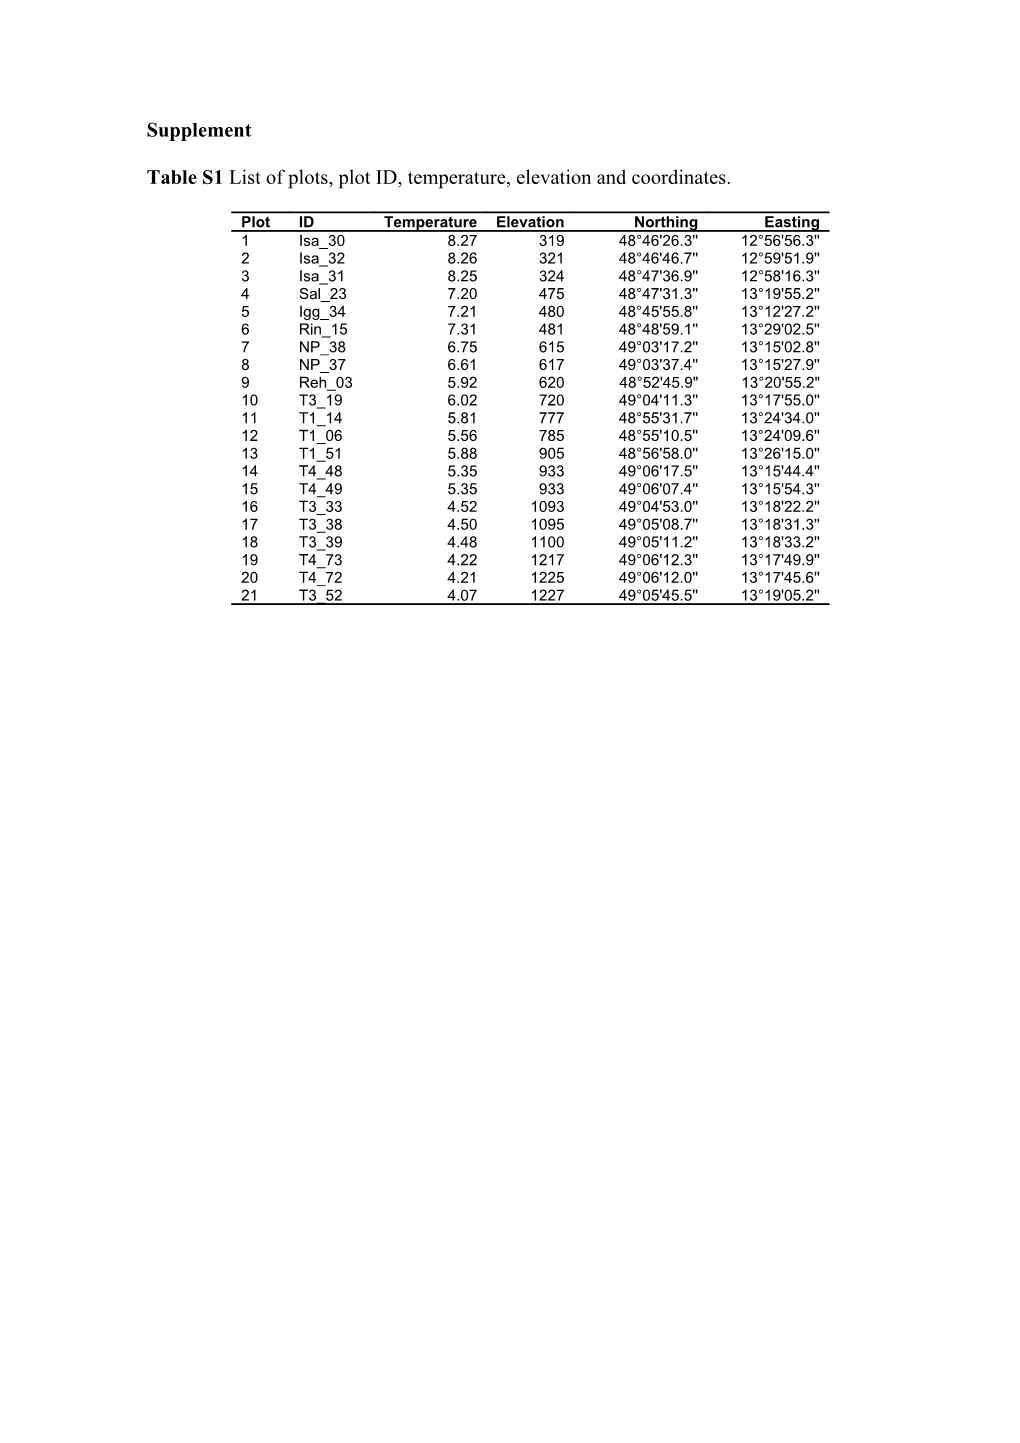 Table S1 List Ofplots, Plot ID, Temperature,Elevation and Coordinates